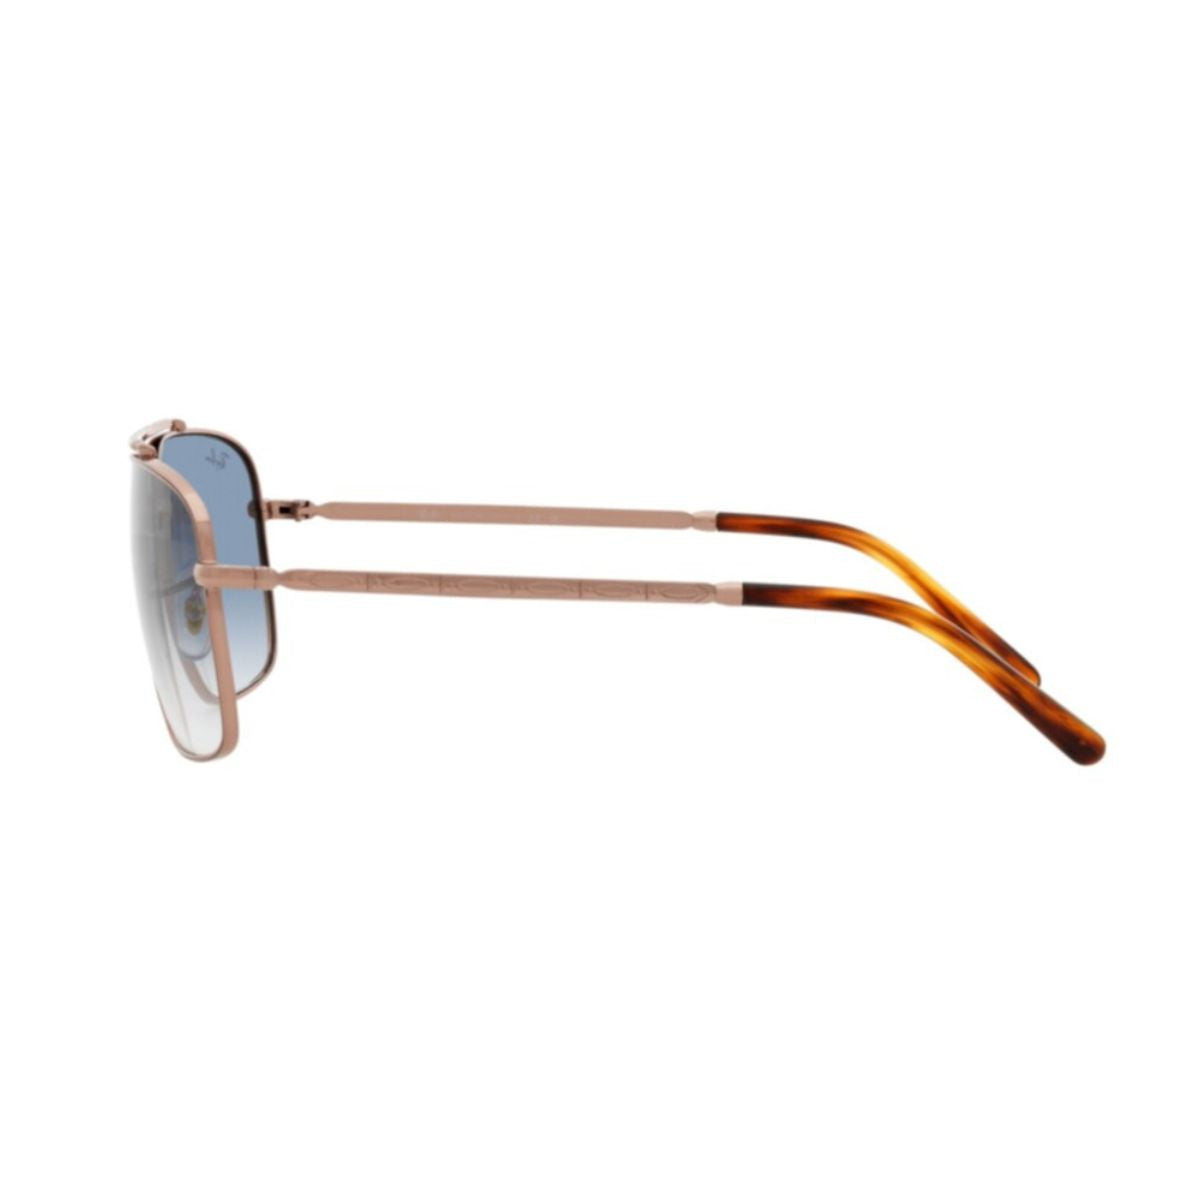 "Rayban 3796 9202/3f UV Protection Fashionable Sunglasses At Optorium"